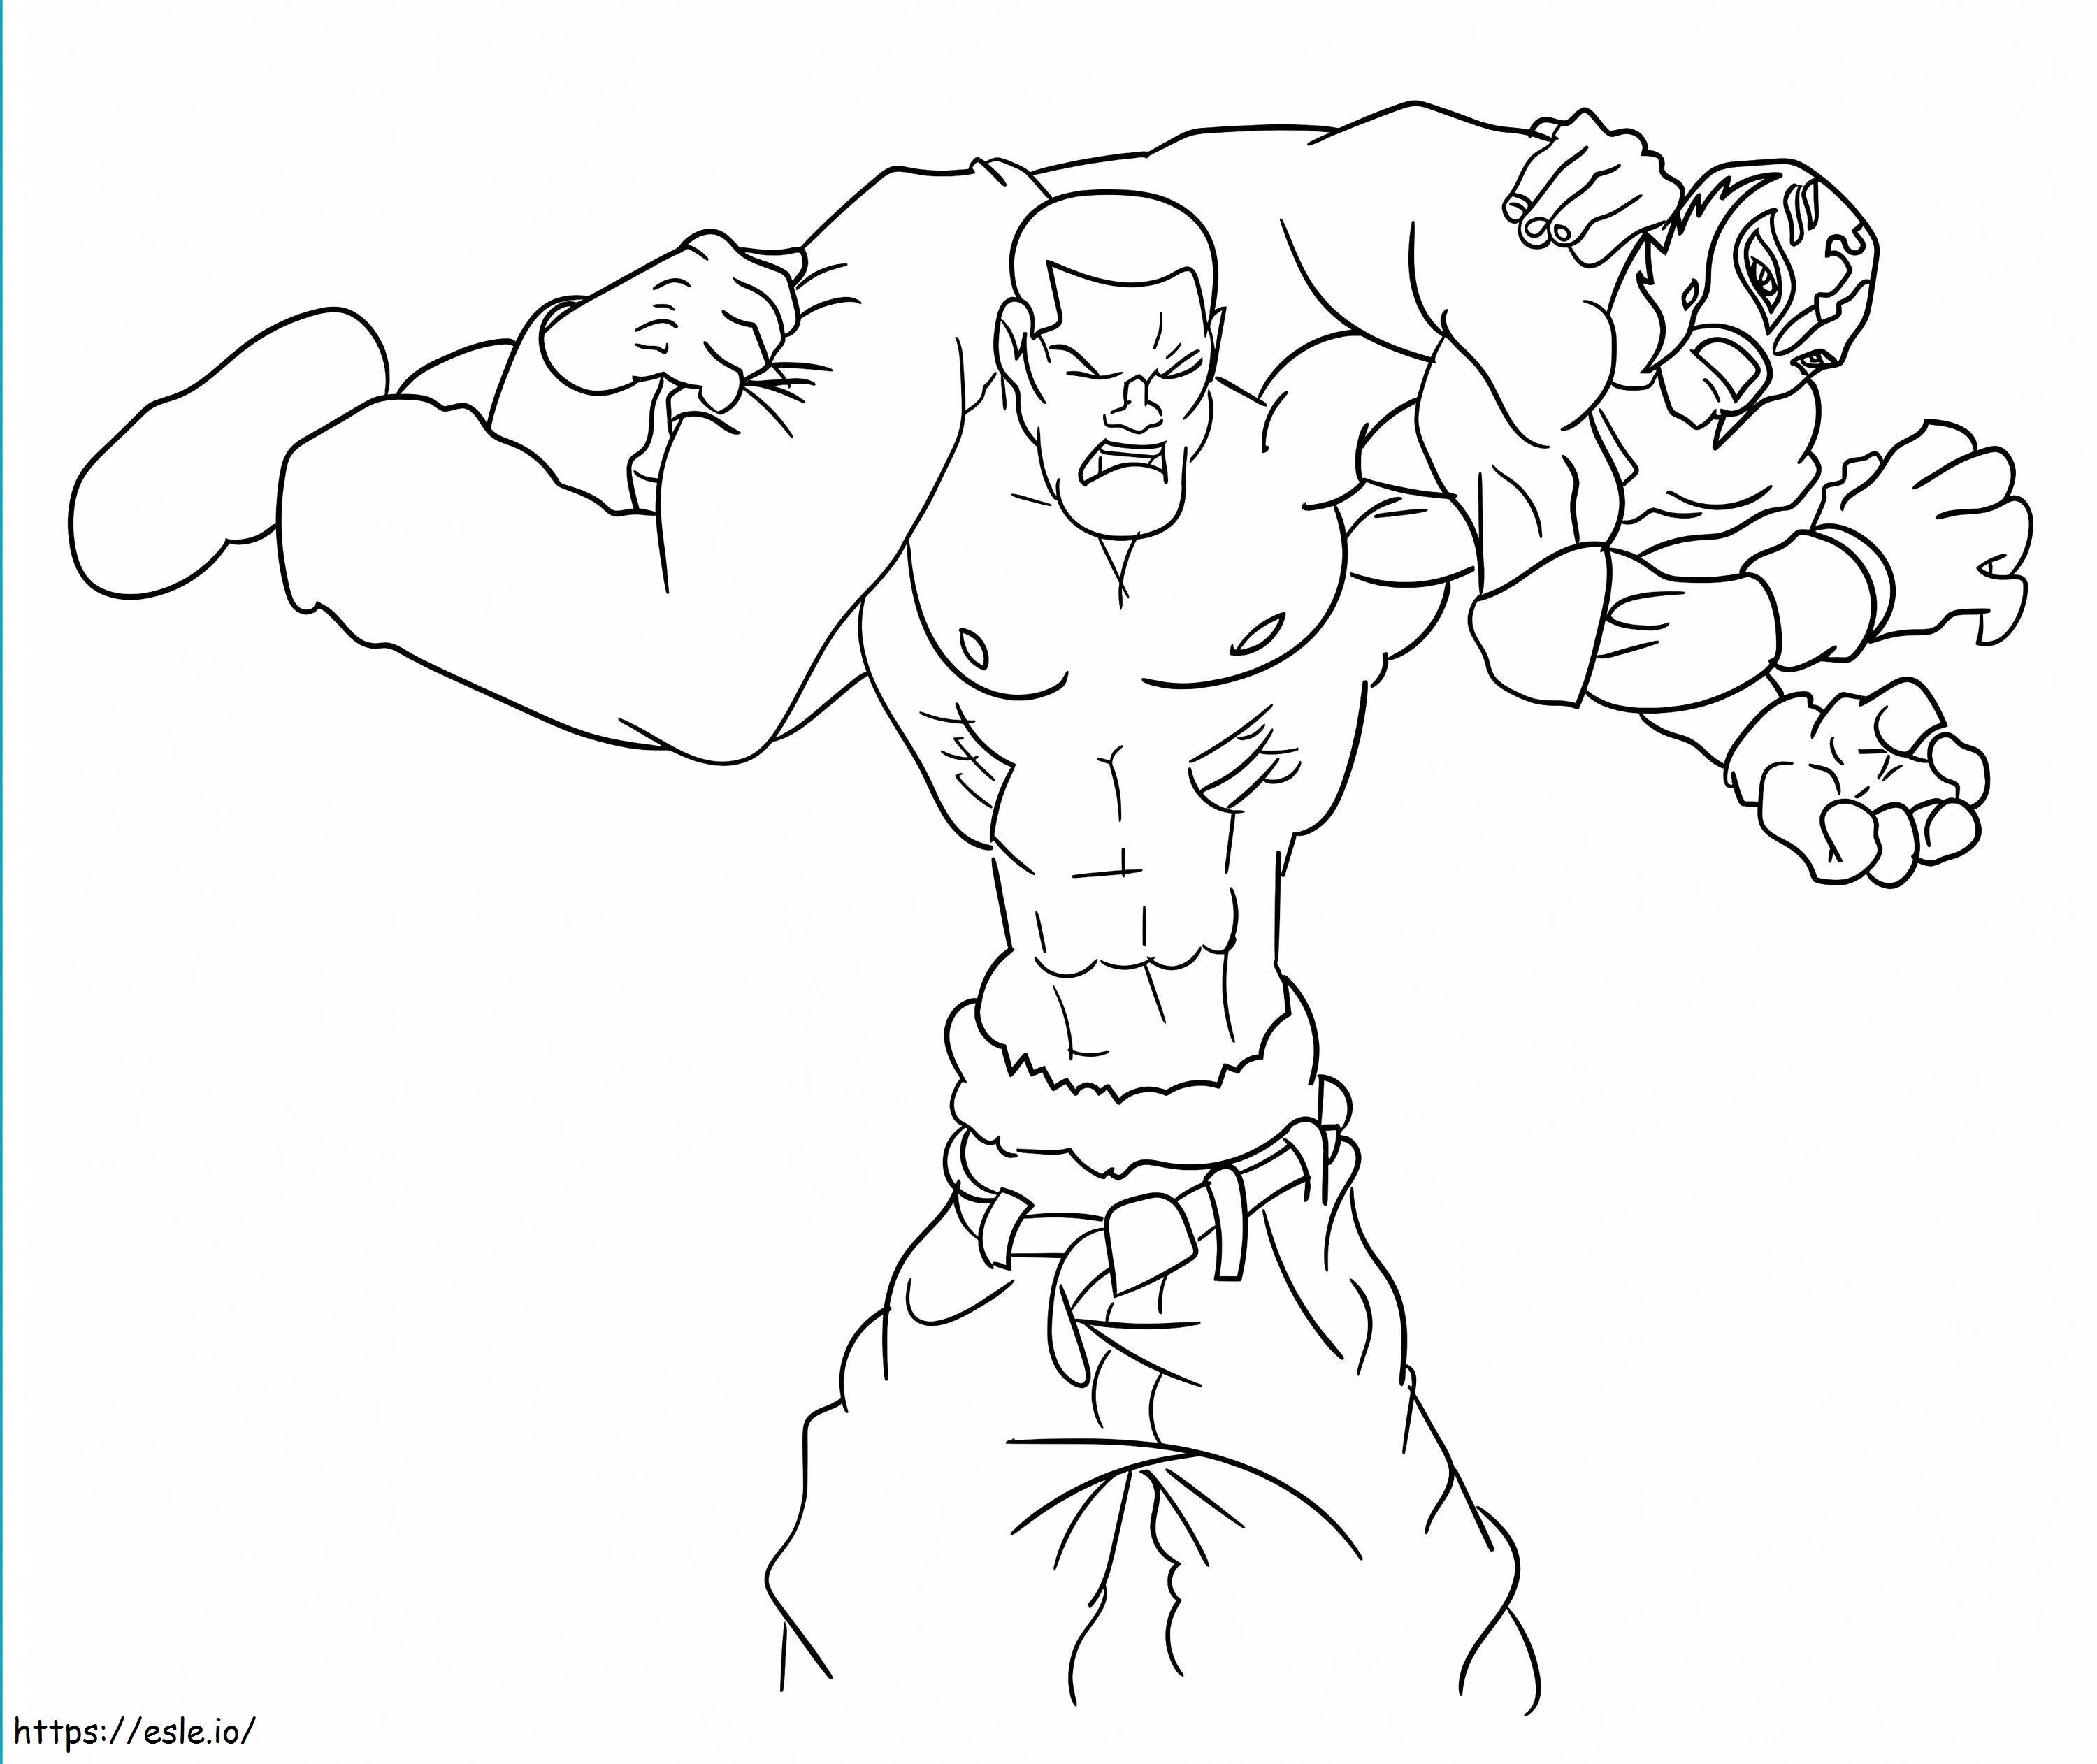 Strong John Cena coloring page